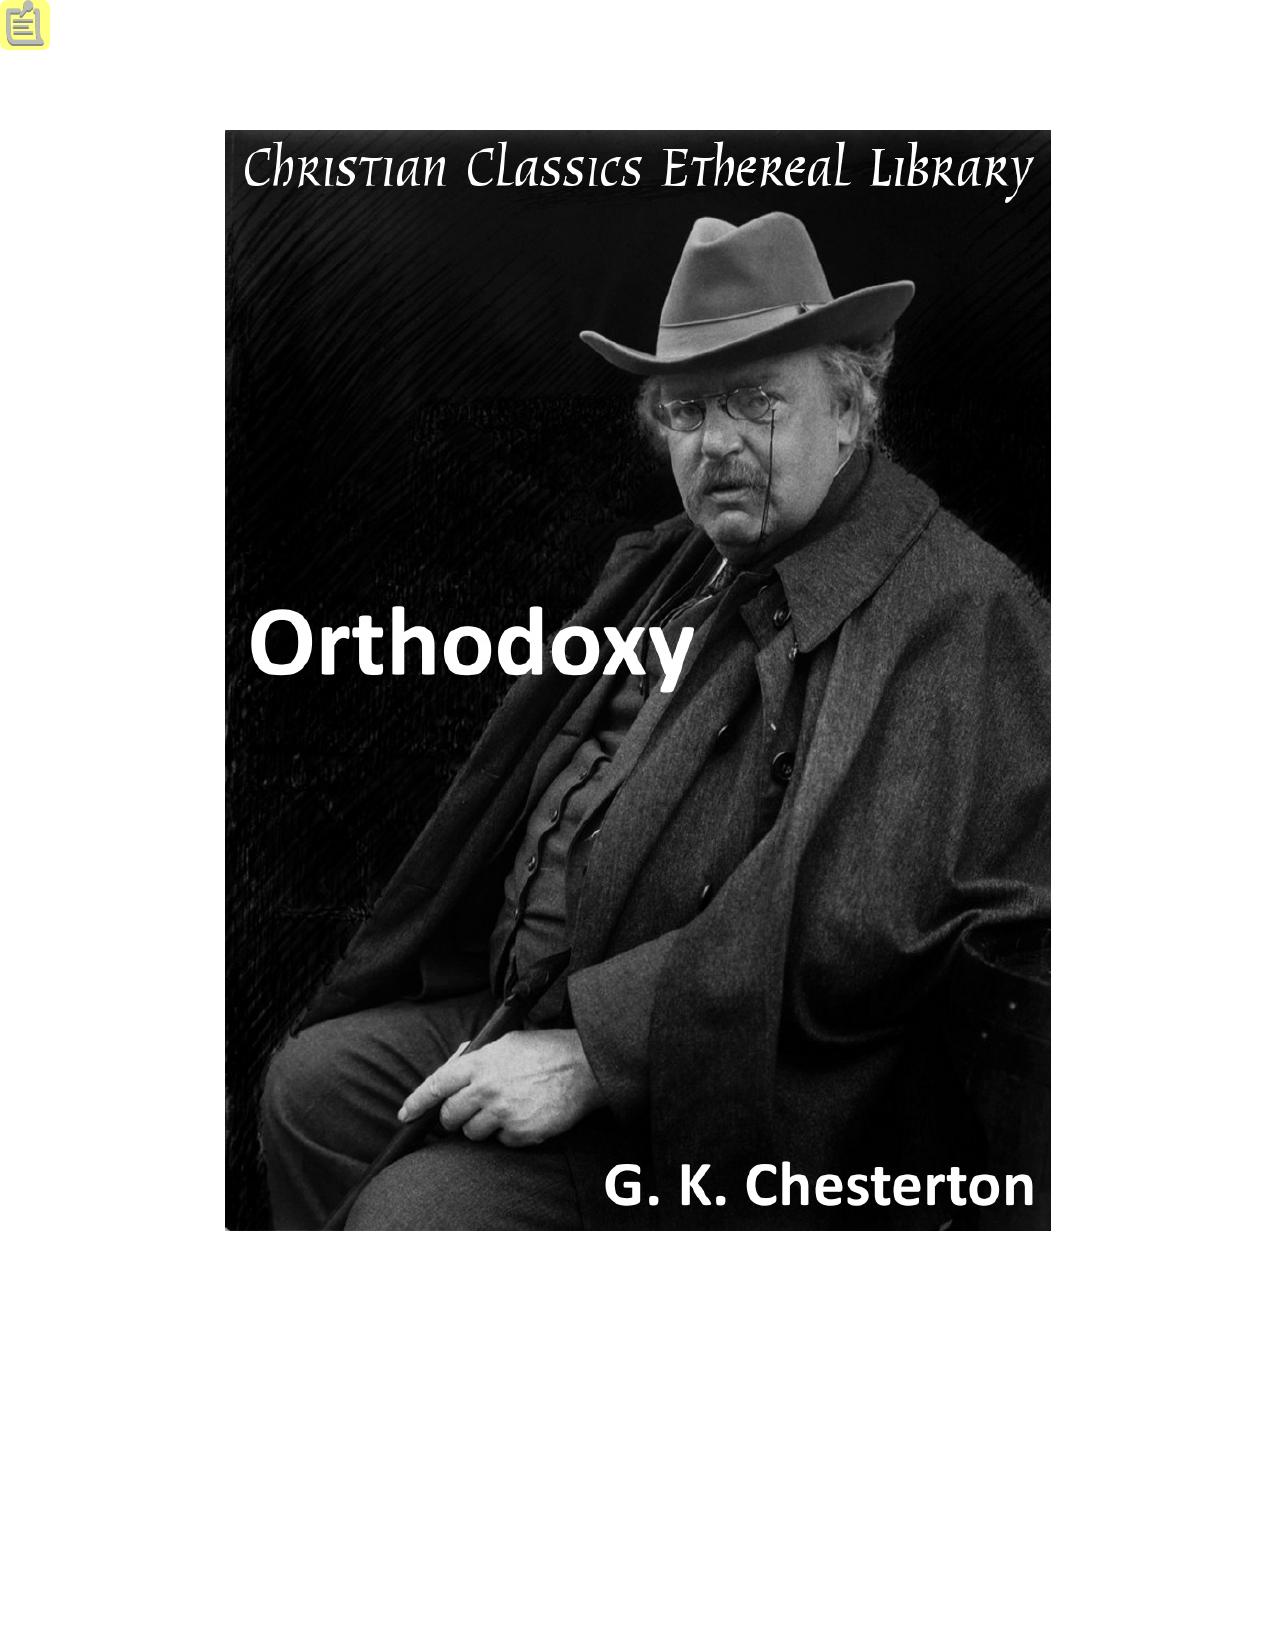 Orthodoxy by Gilbert K. Chesterton